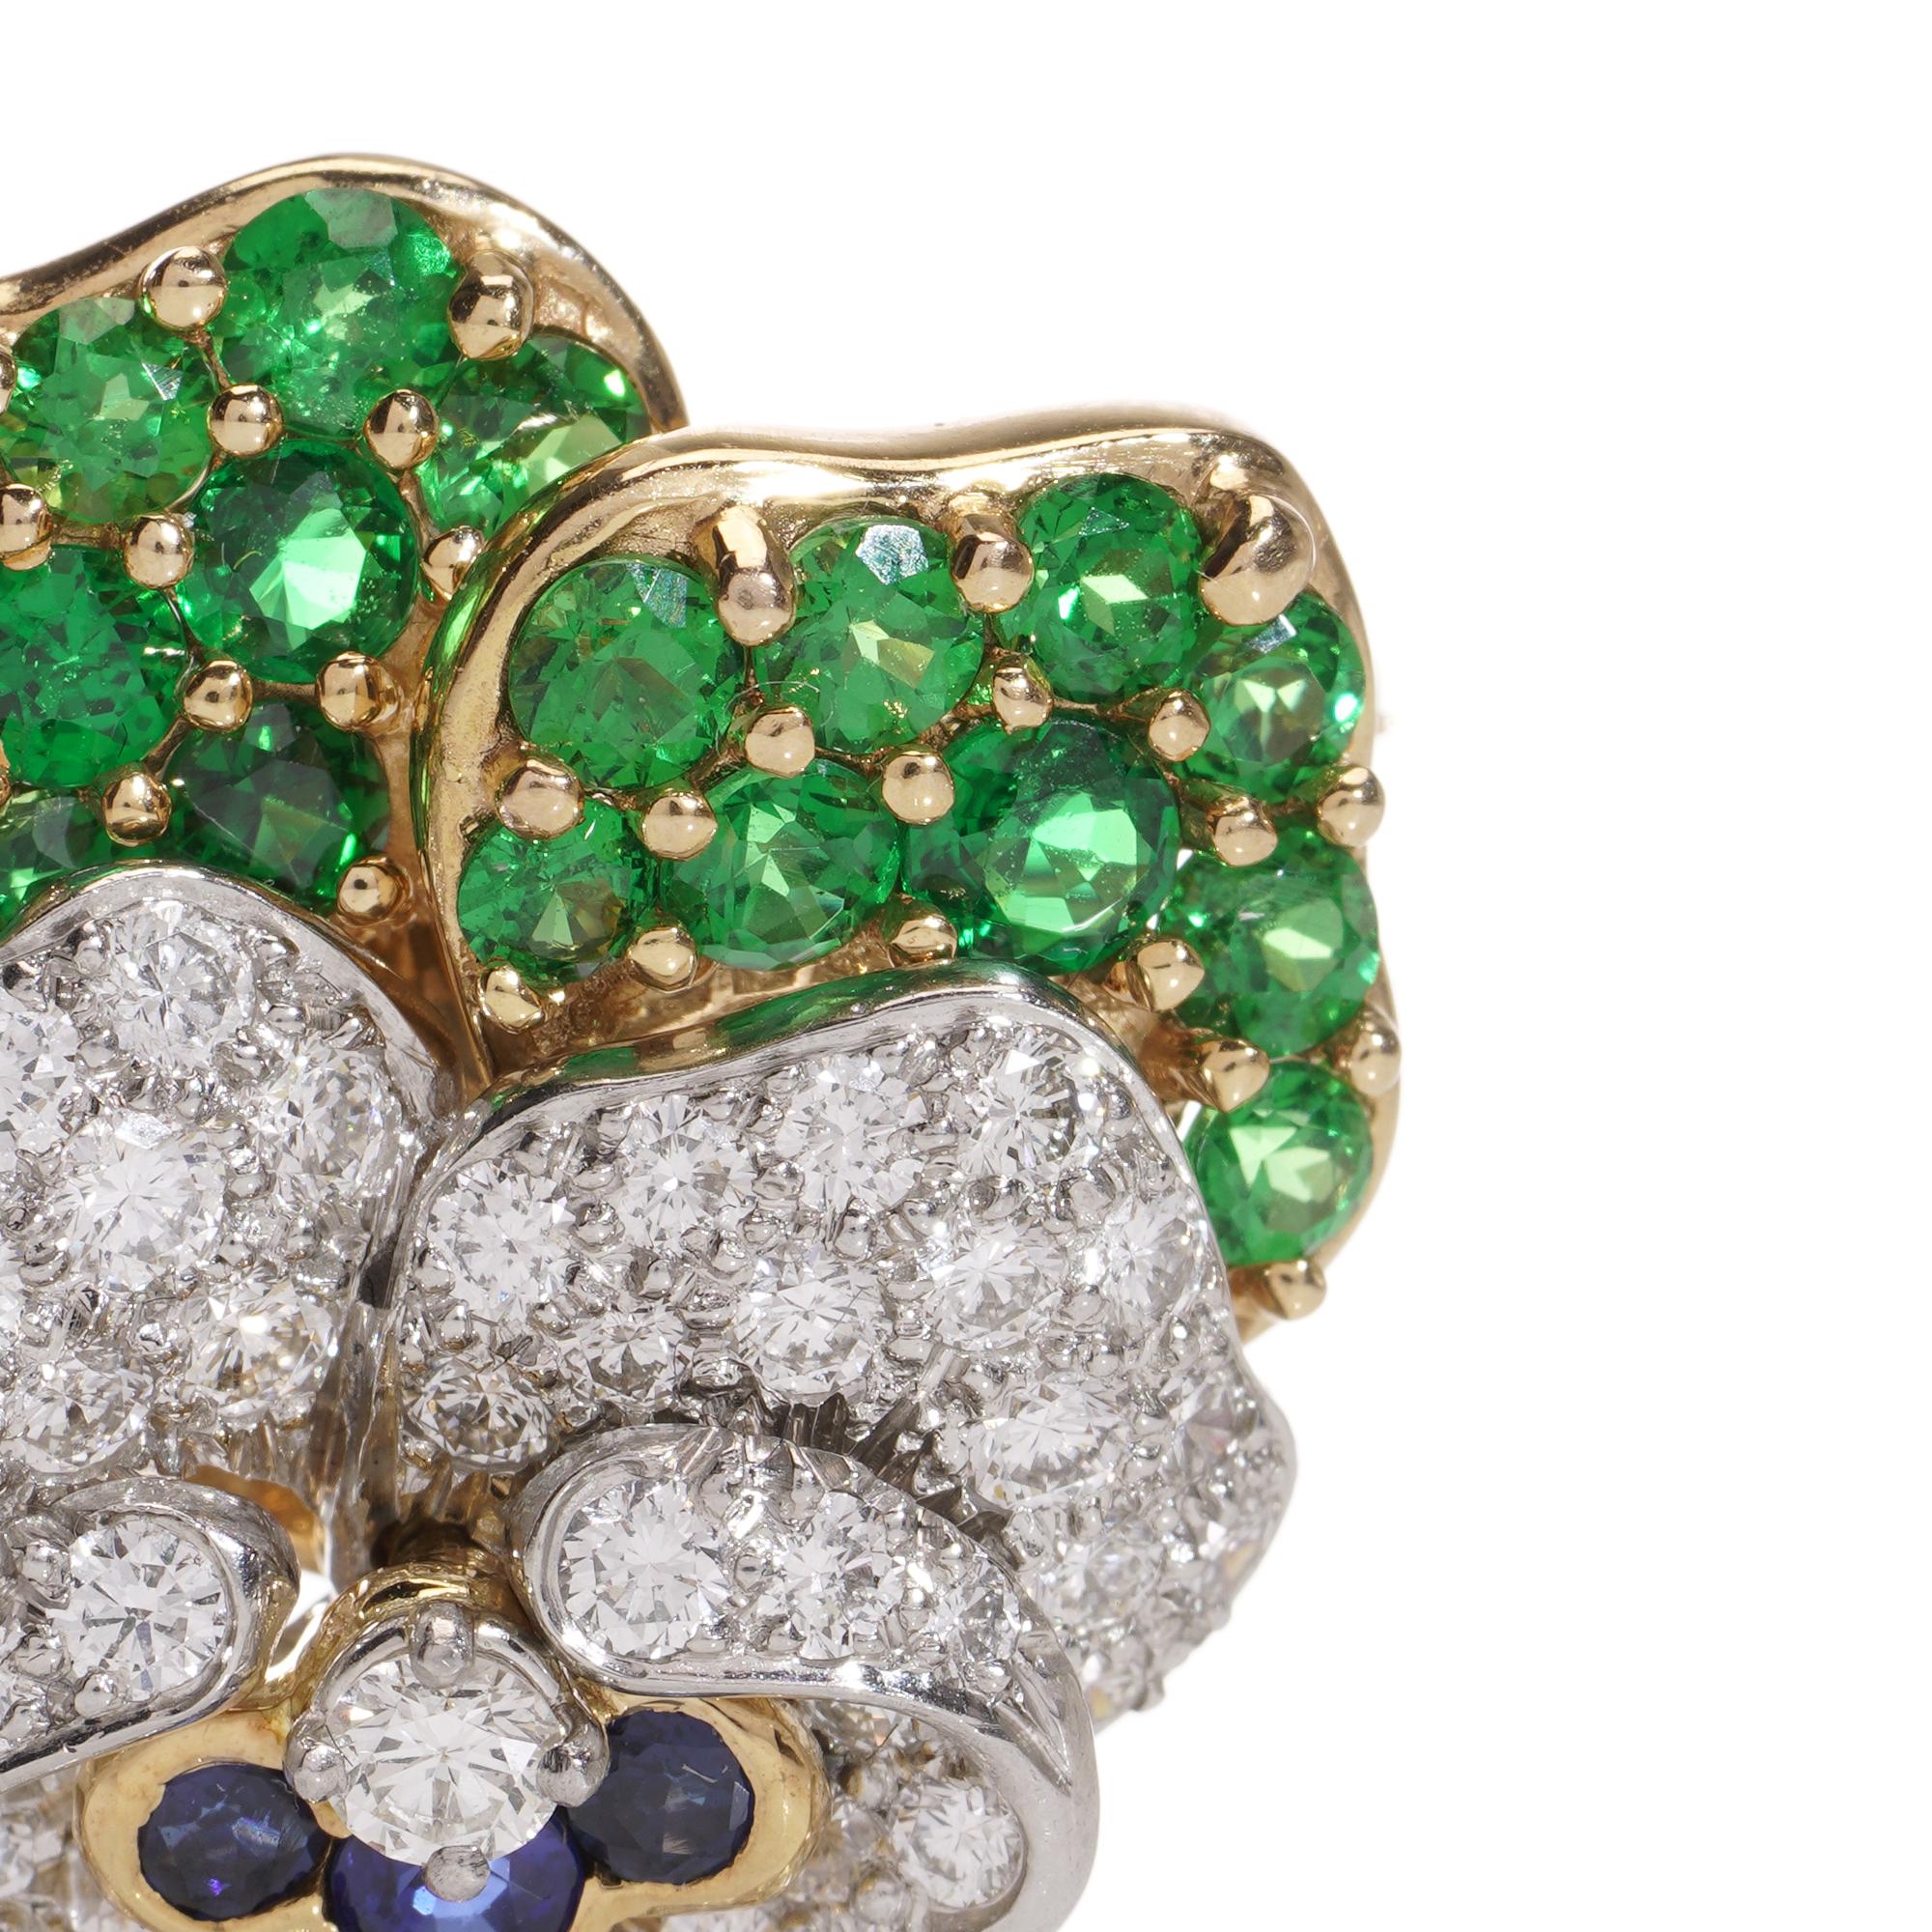 Brilliant Cut Tiffany & Co. Pansy Brooch with Diamonds, Sapphires, Tsavorite Garnets For Sale